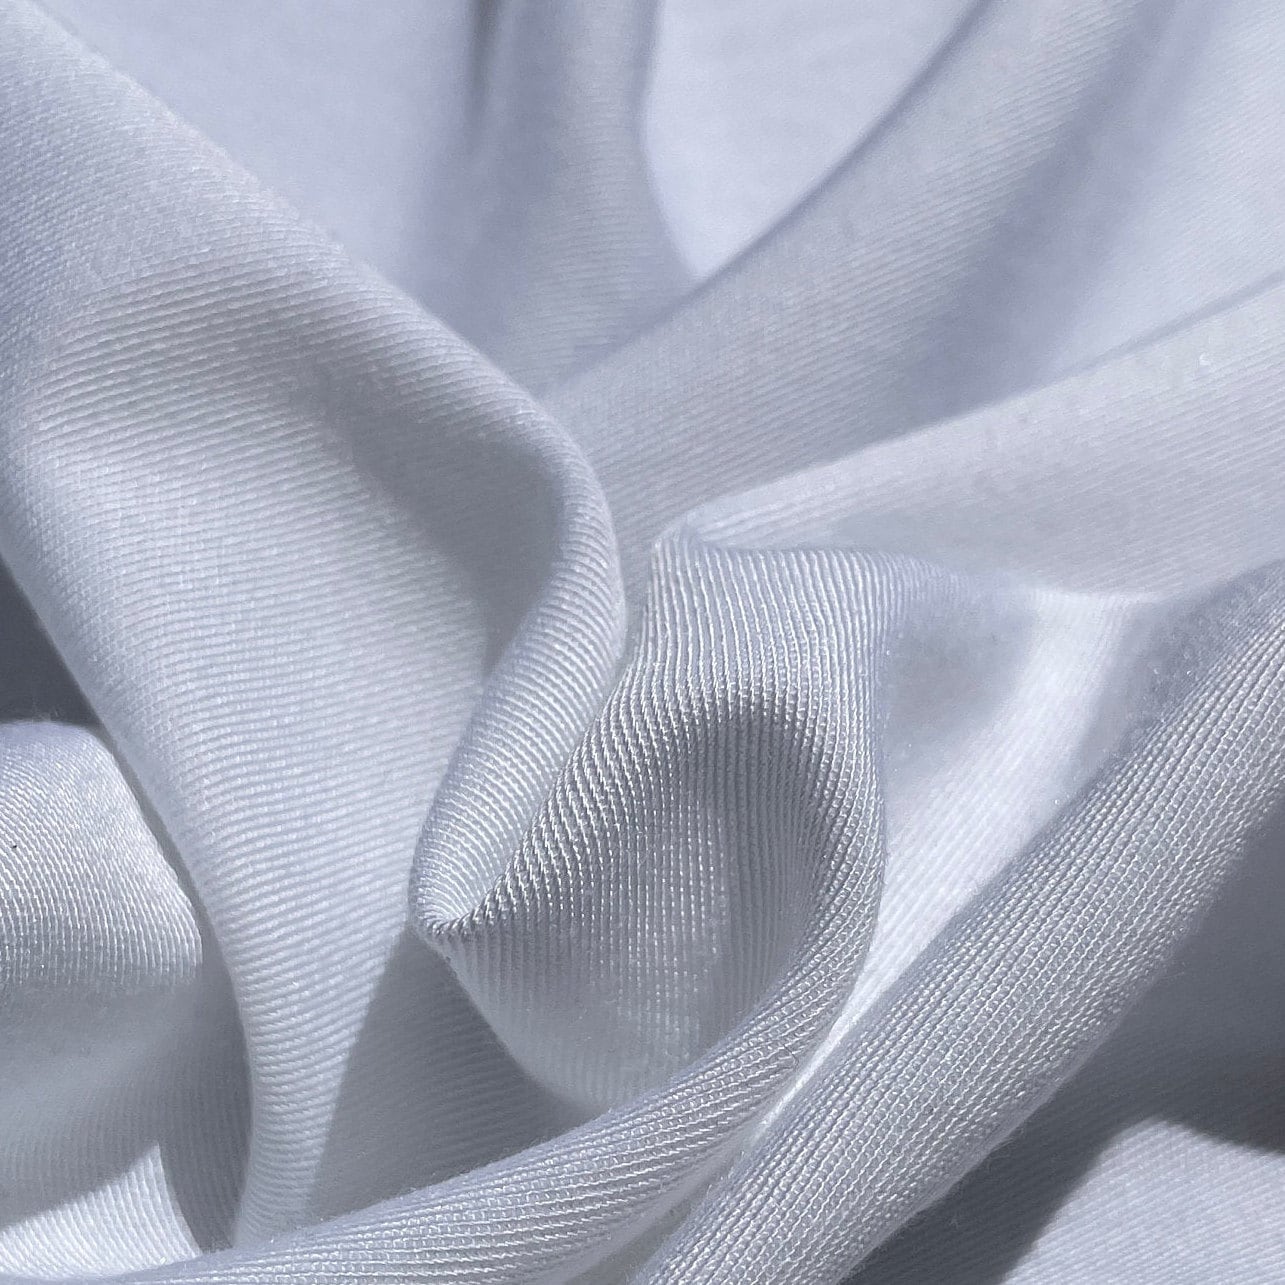 FIBER : Polyester - Colmant Coated Fabrics